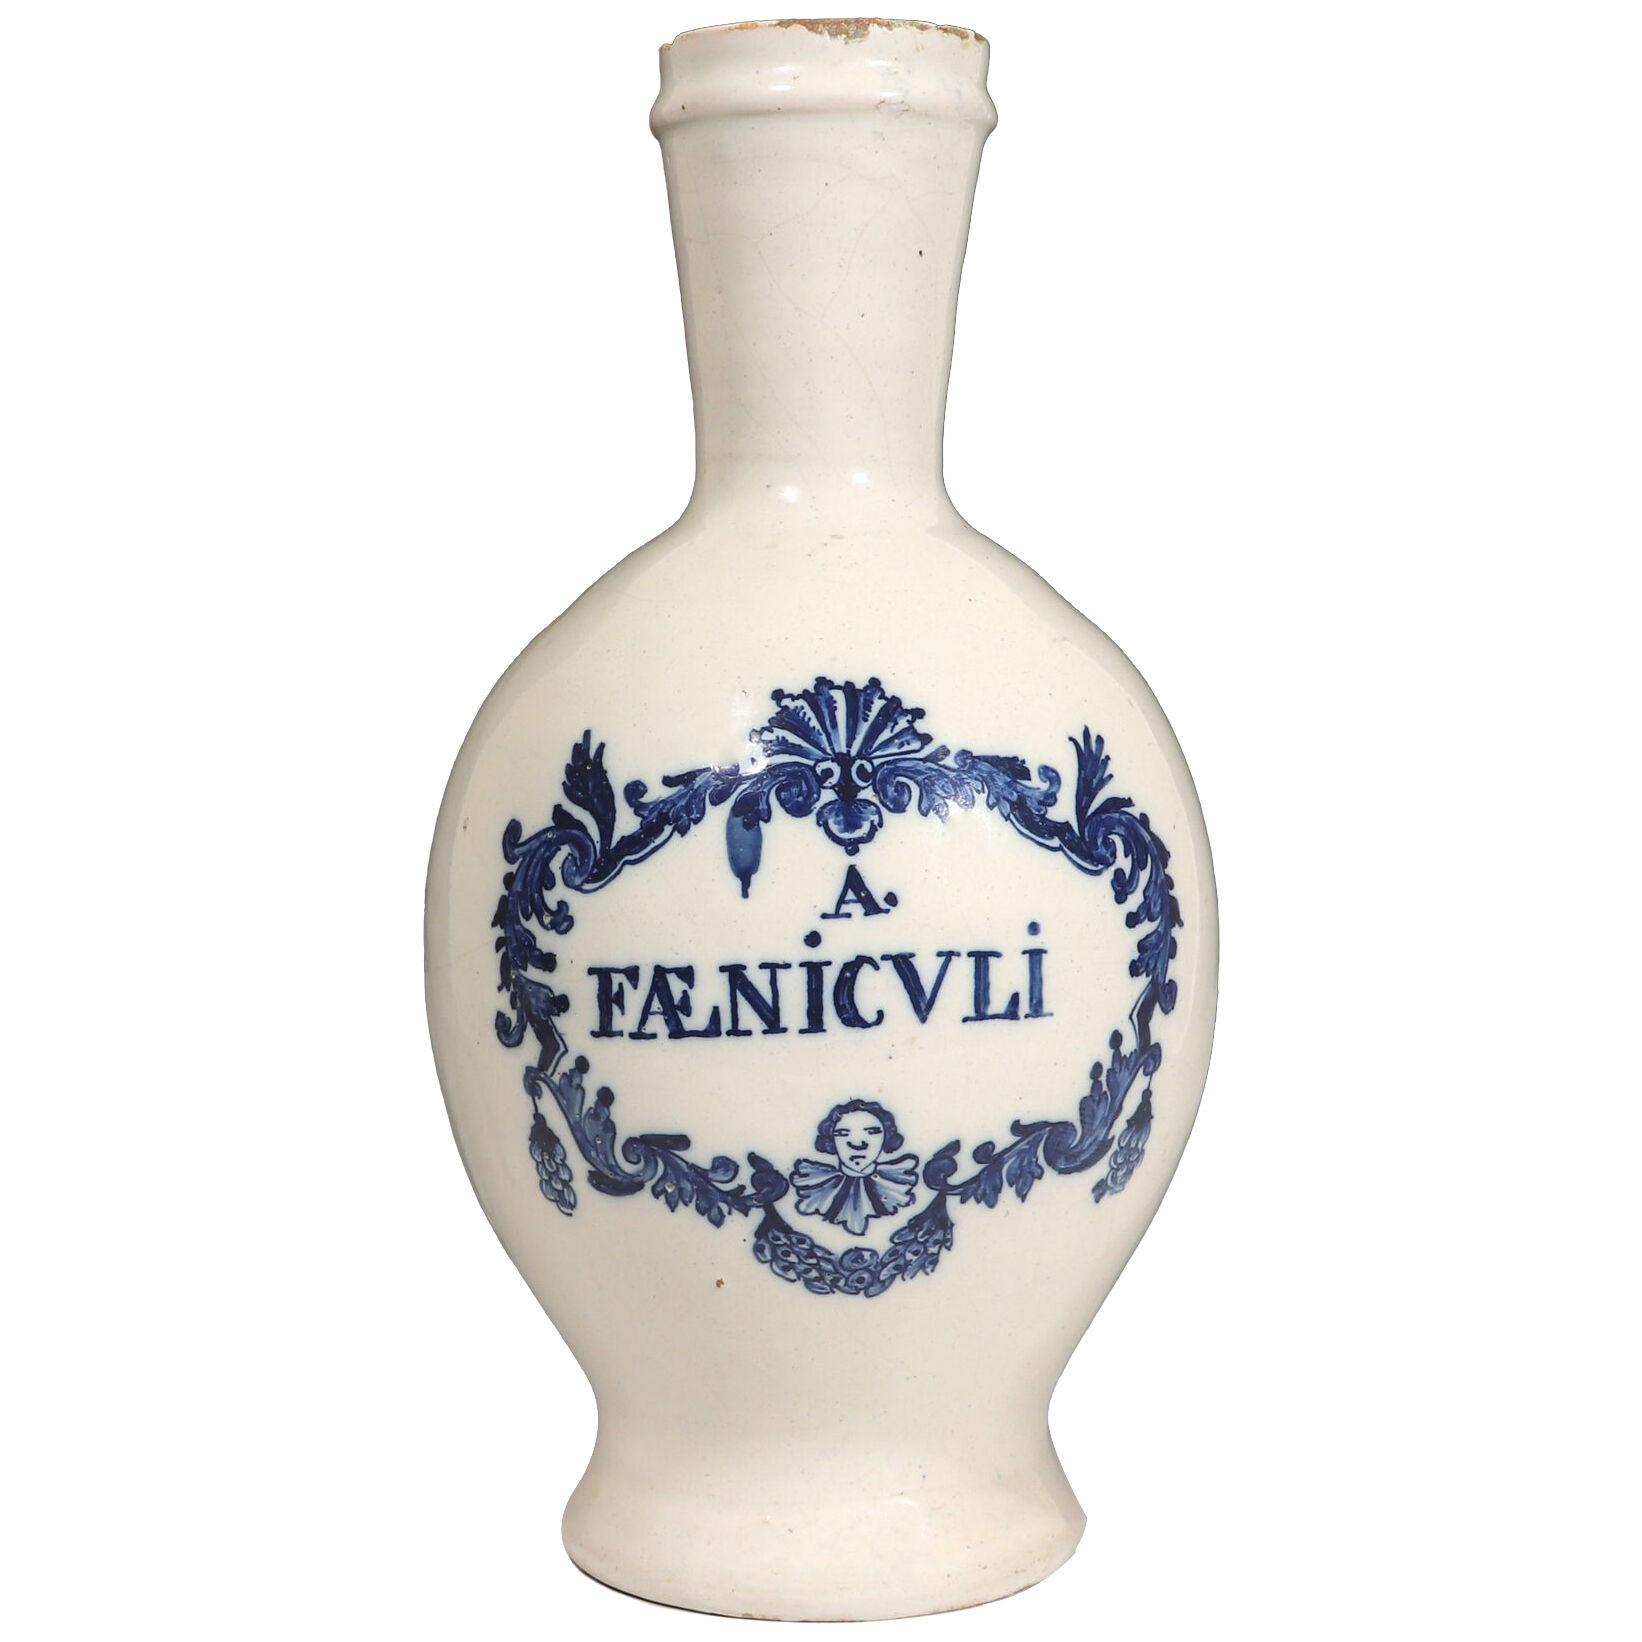 18th Century Dutch Delft Bottle-shaped Wet Drug Jar Inscribed 'A. FAENICVLI'